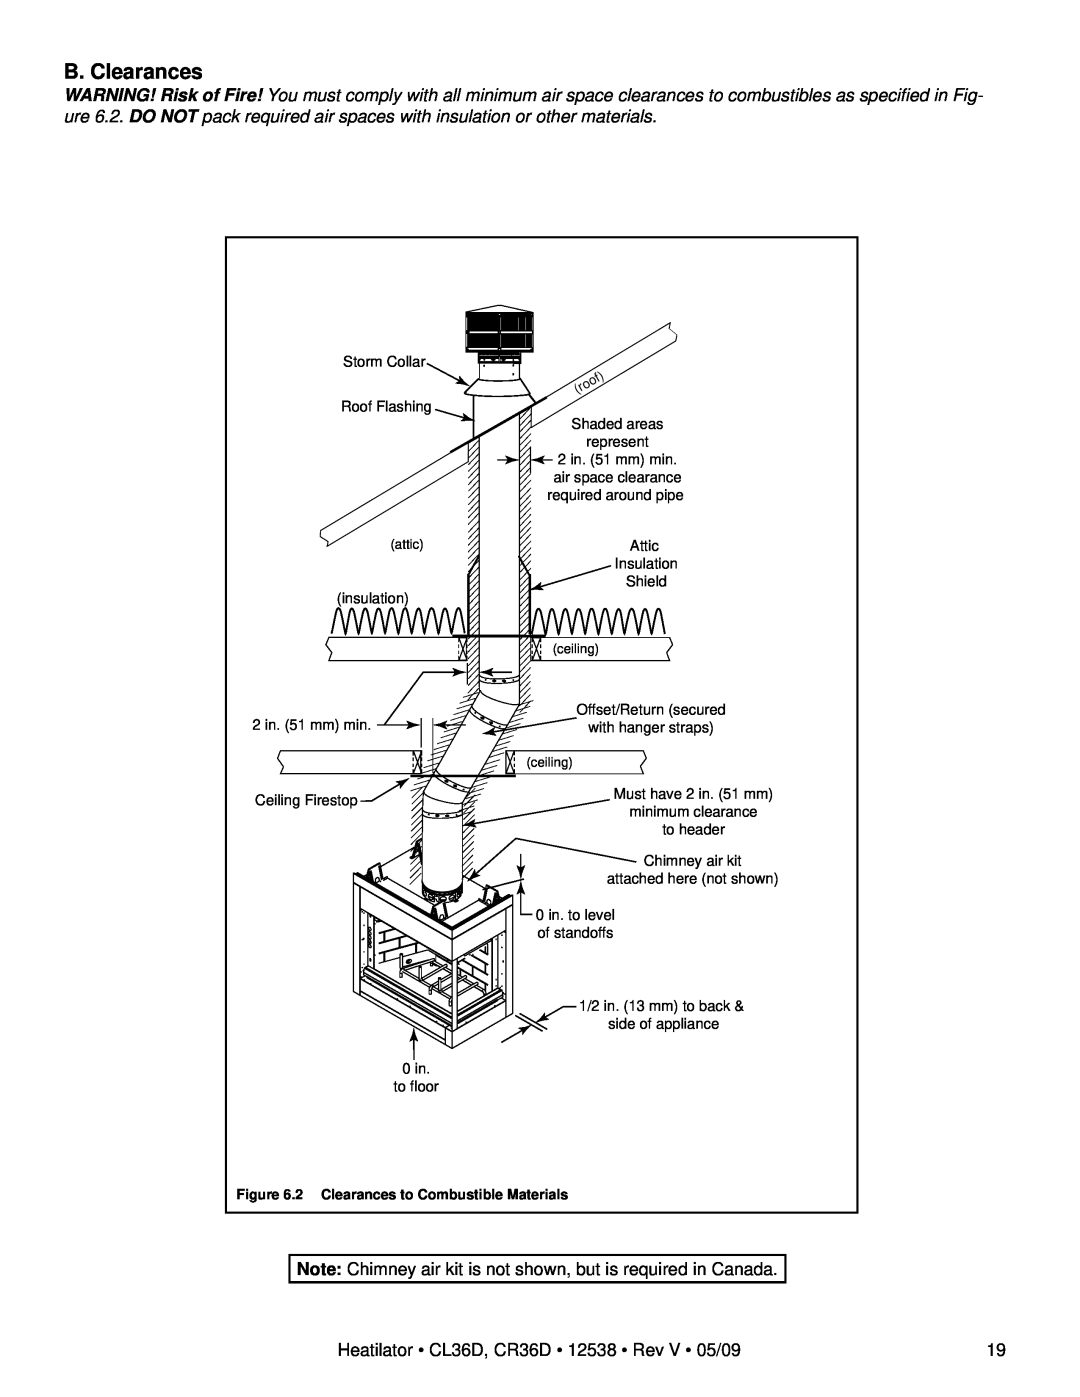 Heatiator owner manual B. Clearances, Heatilator CL36D, CR36D 12538 Rev V 05/09 